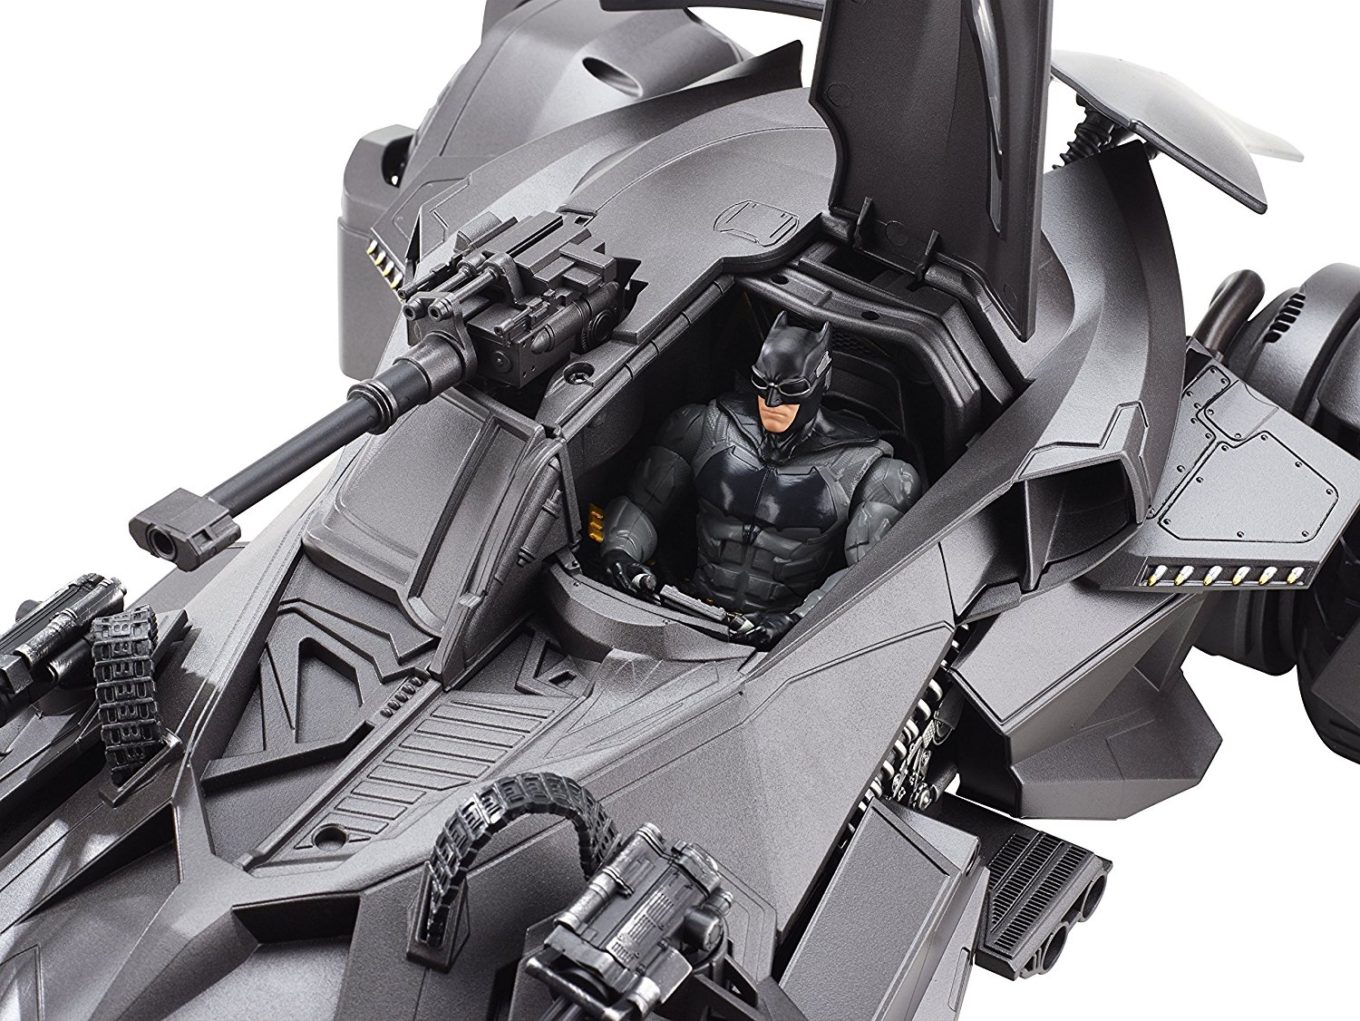 Mattel Remote Control Batmobile closeup. Batman Figure Riding in Batmobile from the Justice League movies